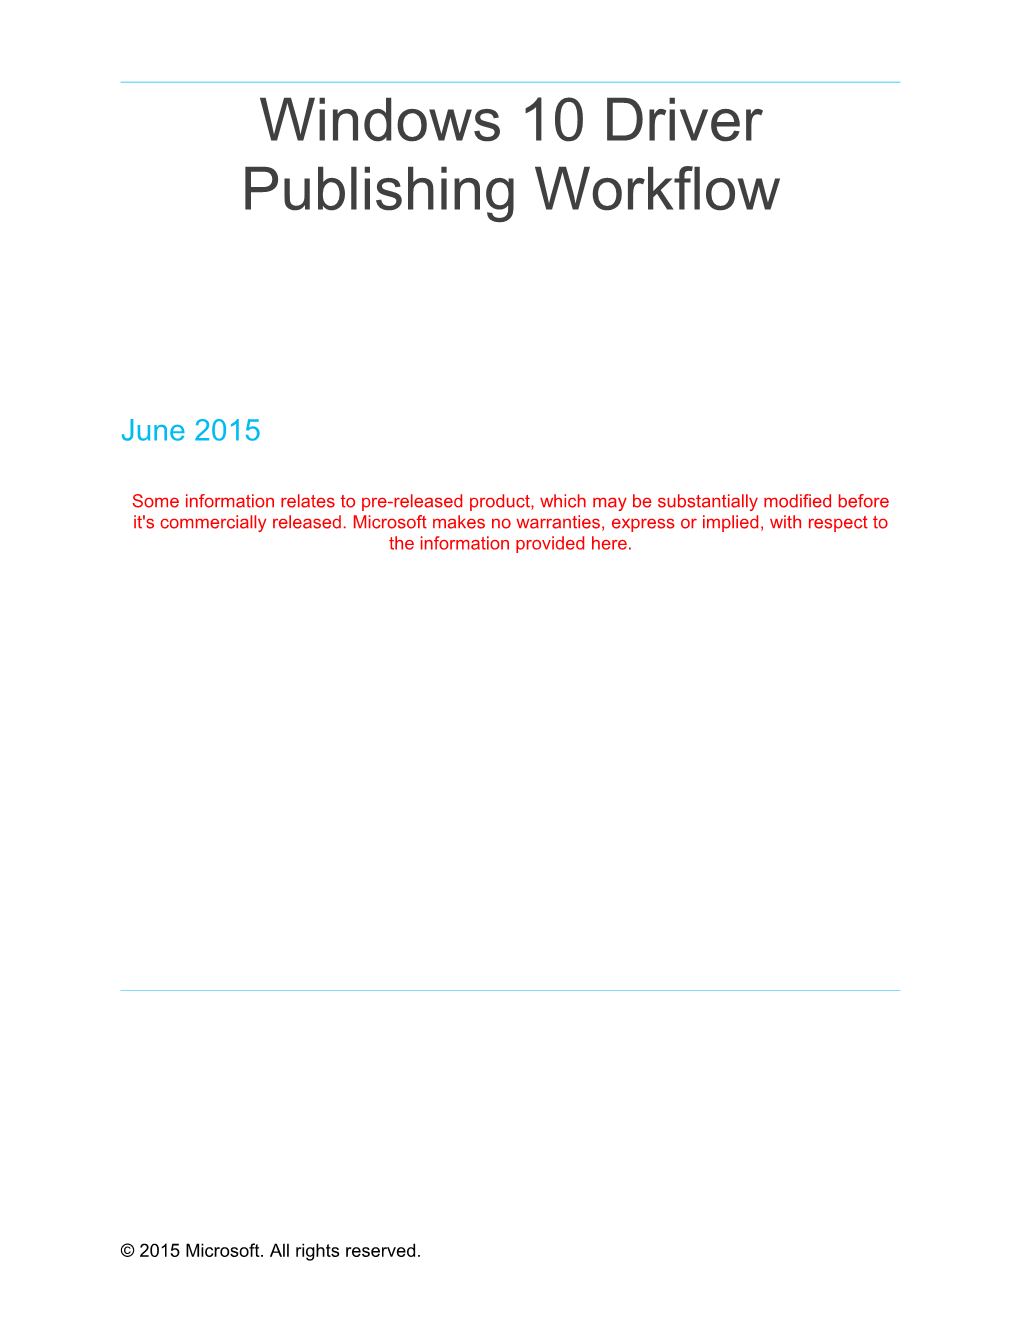 Windows 10 Driver Publishing Workflow